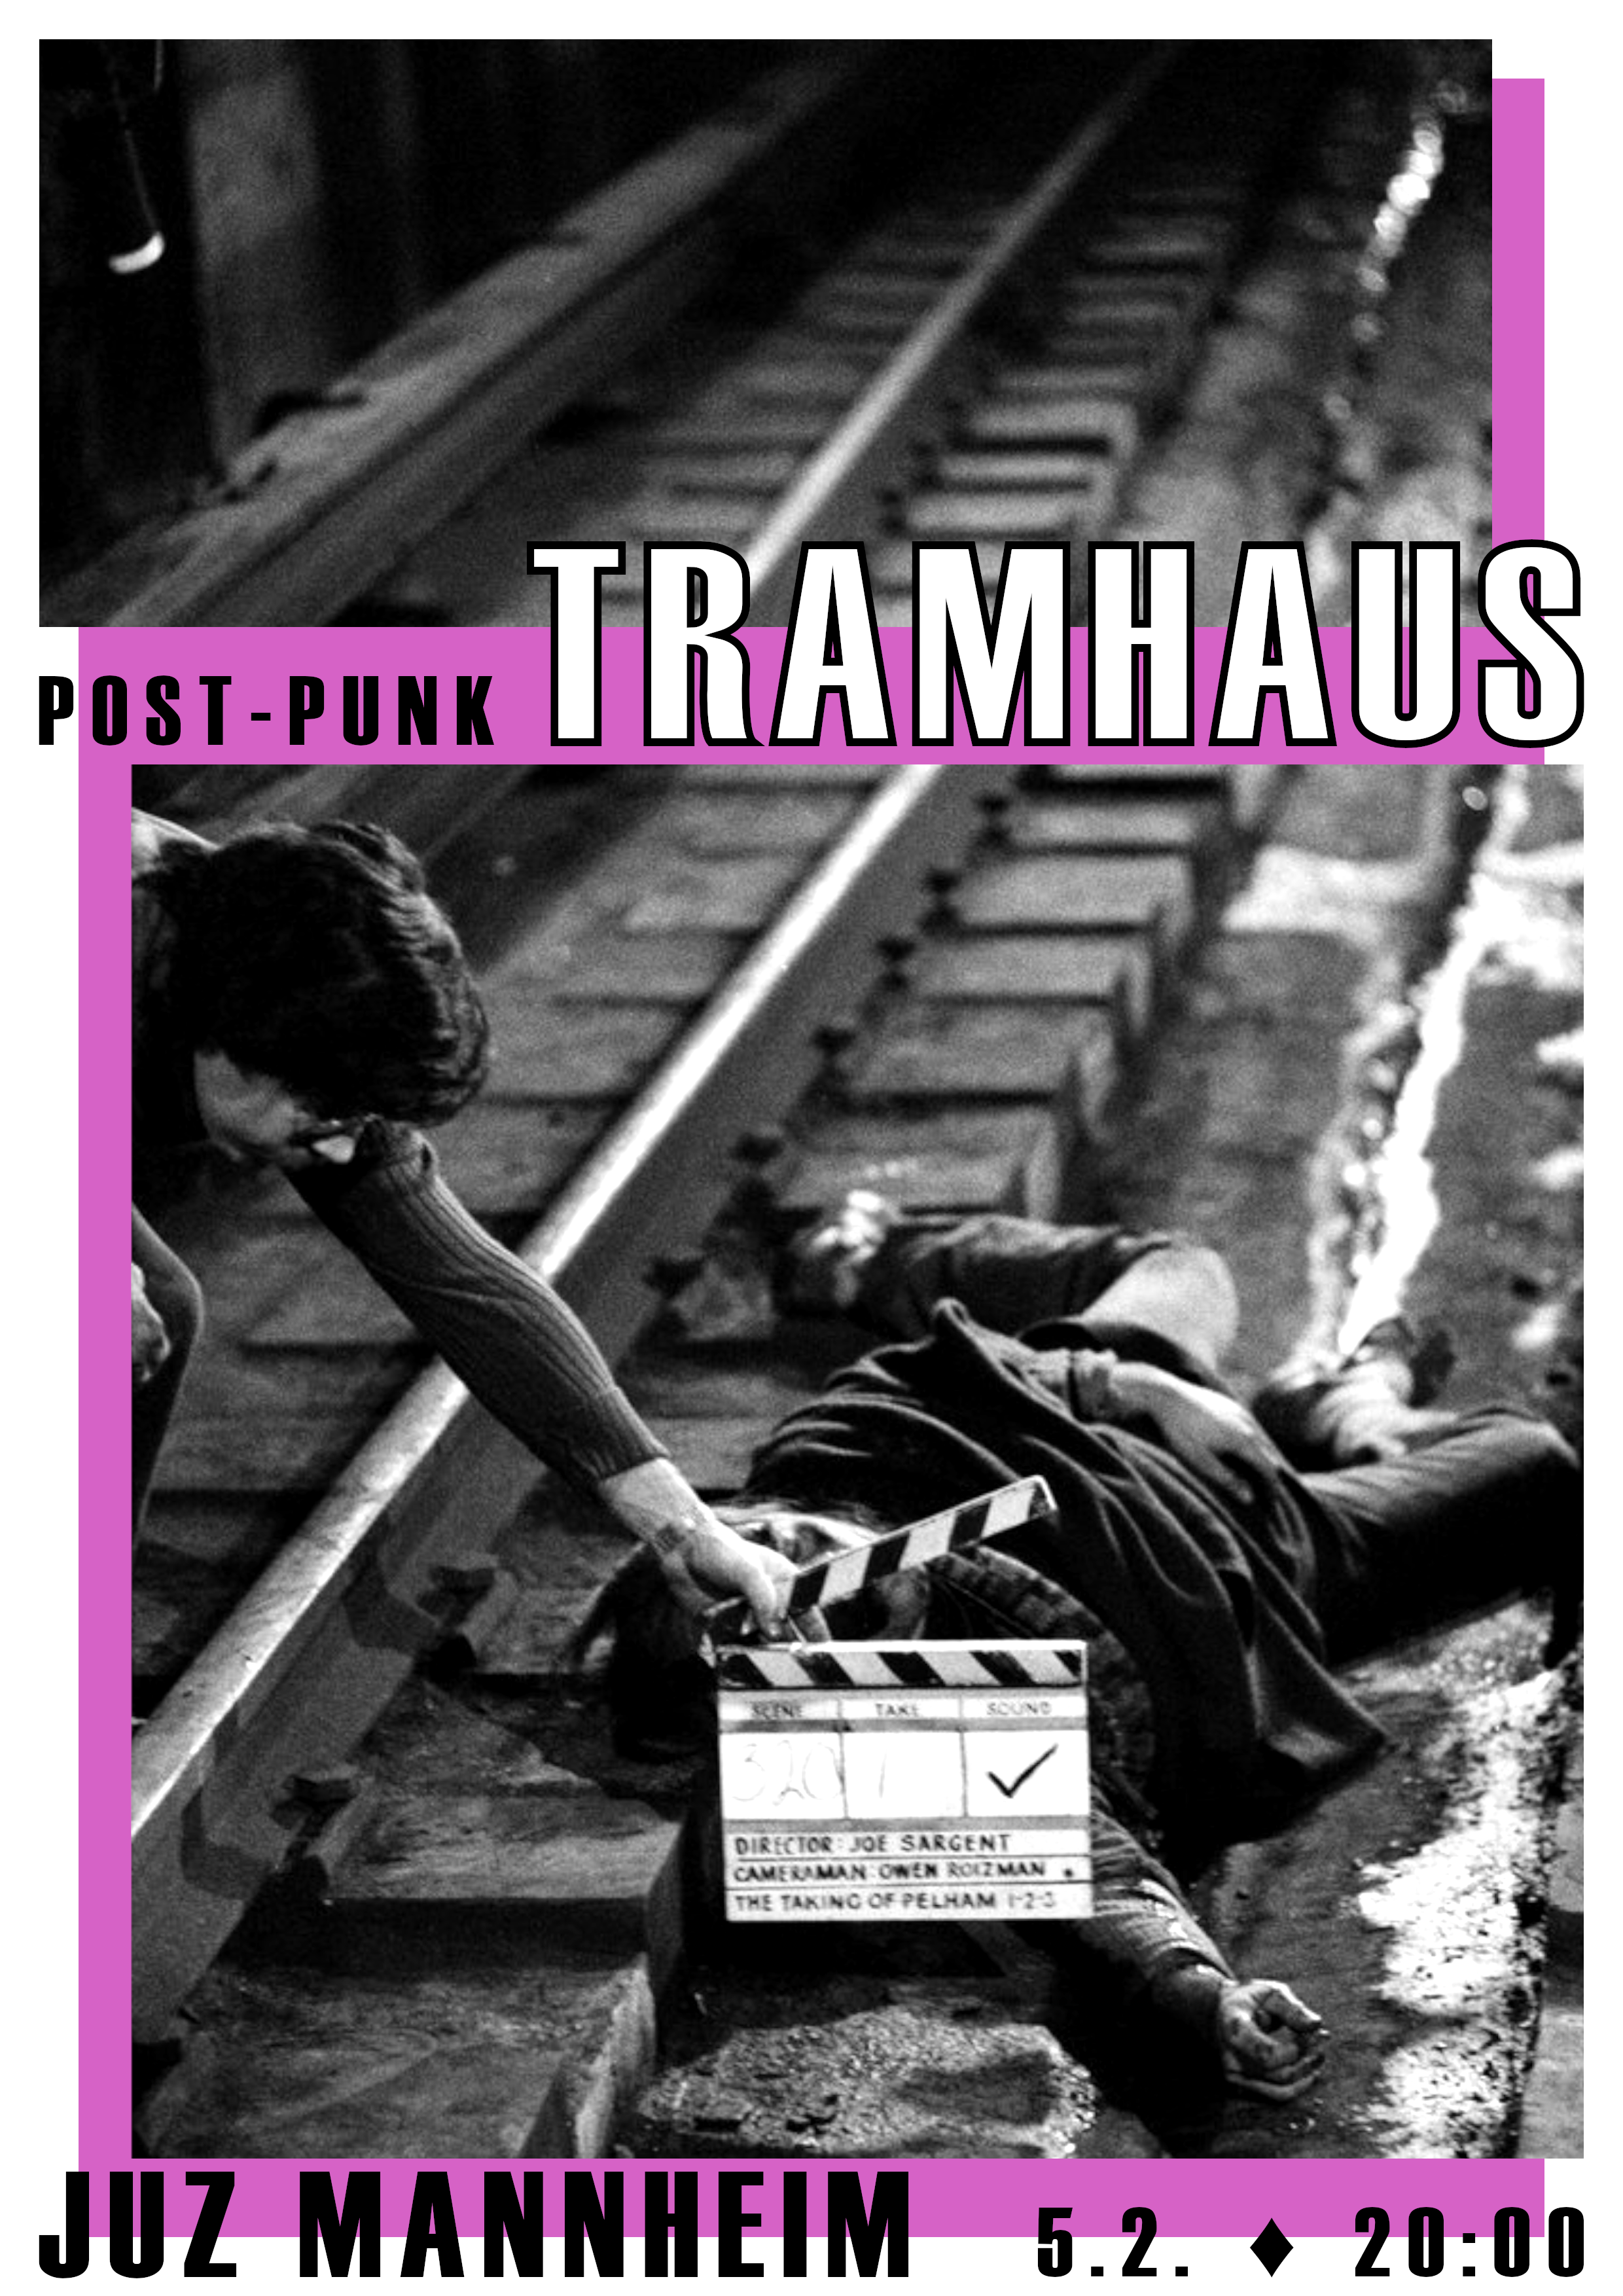 Konzert! w/ Tramhaus (NL, Raw Post-Punk)